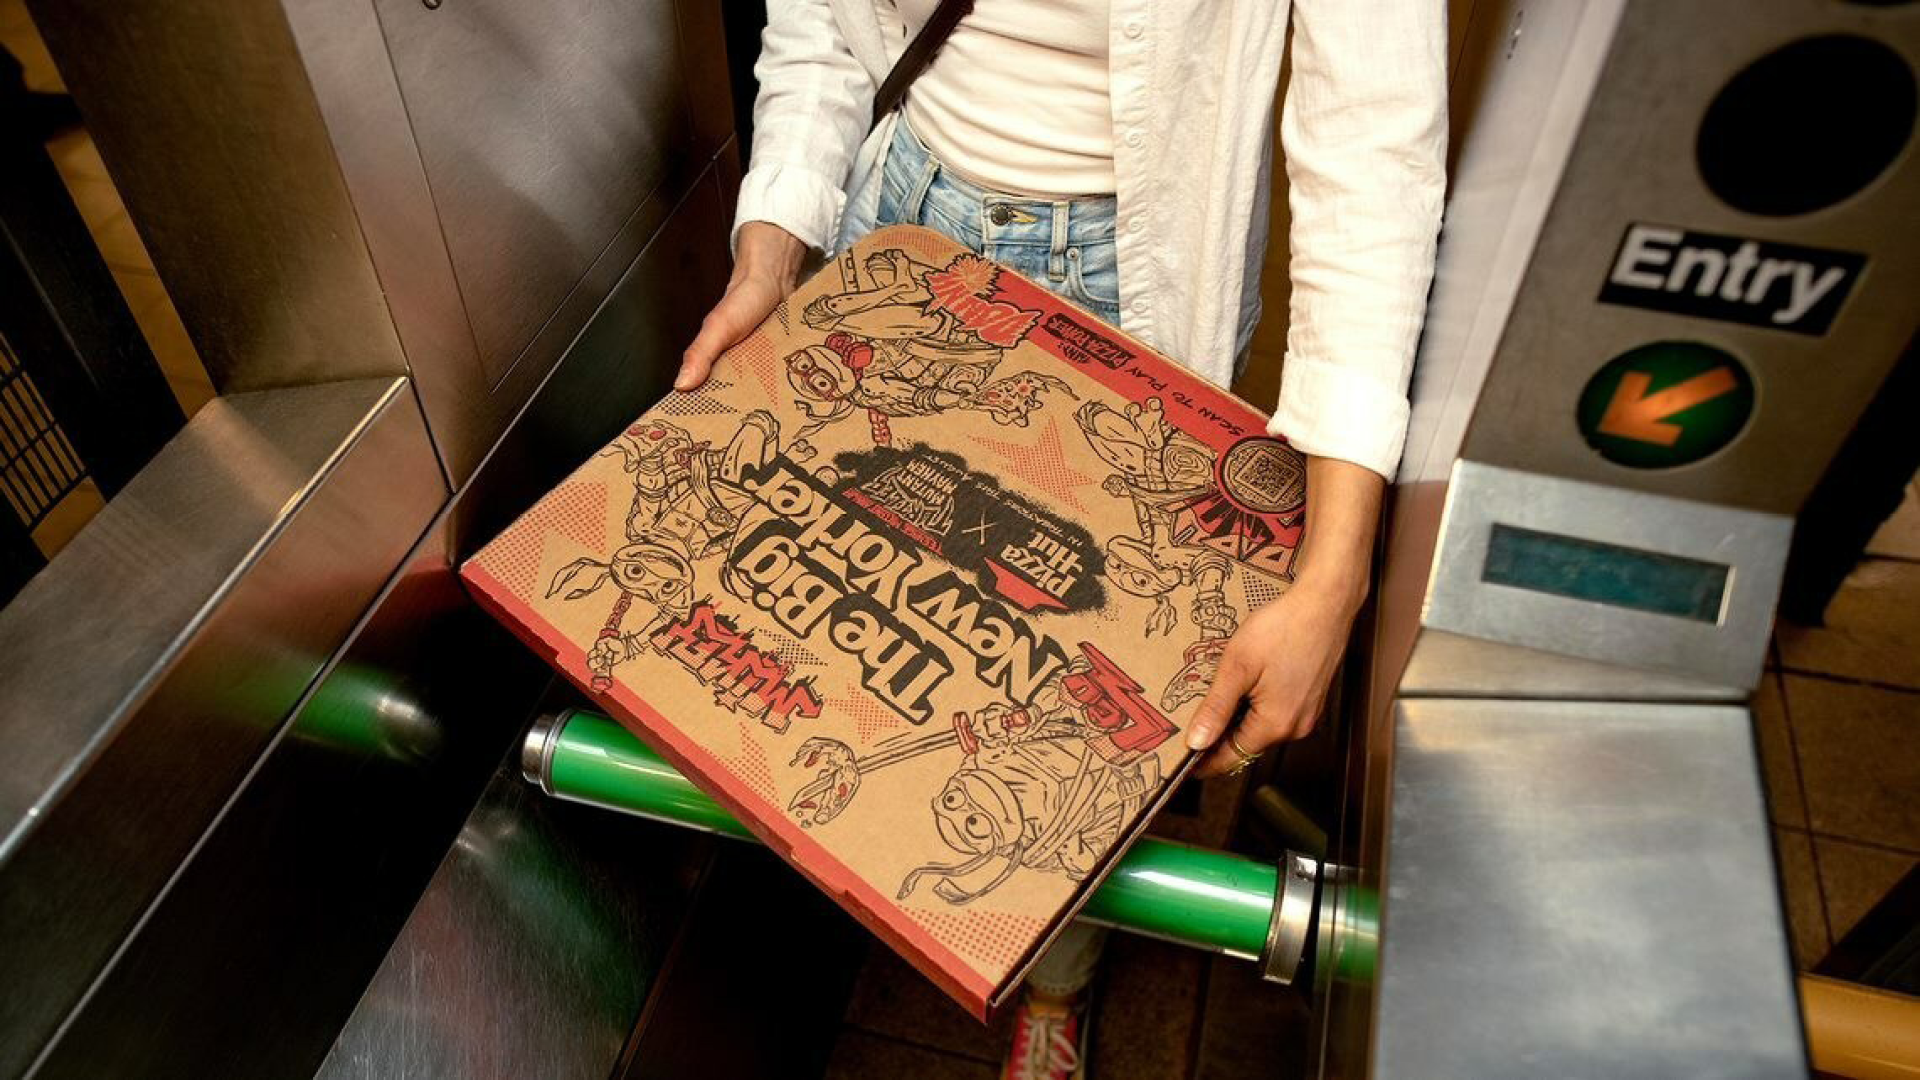 The Original 'Teenage Mutant Ninja Turtles' Is Hosting A Virtual Pizza Party